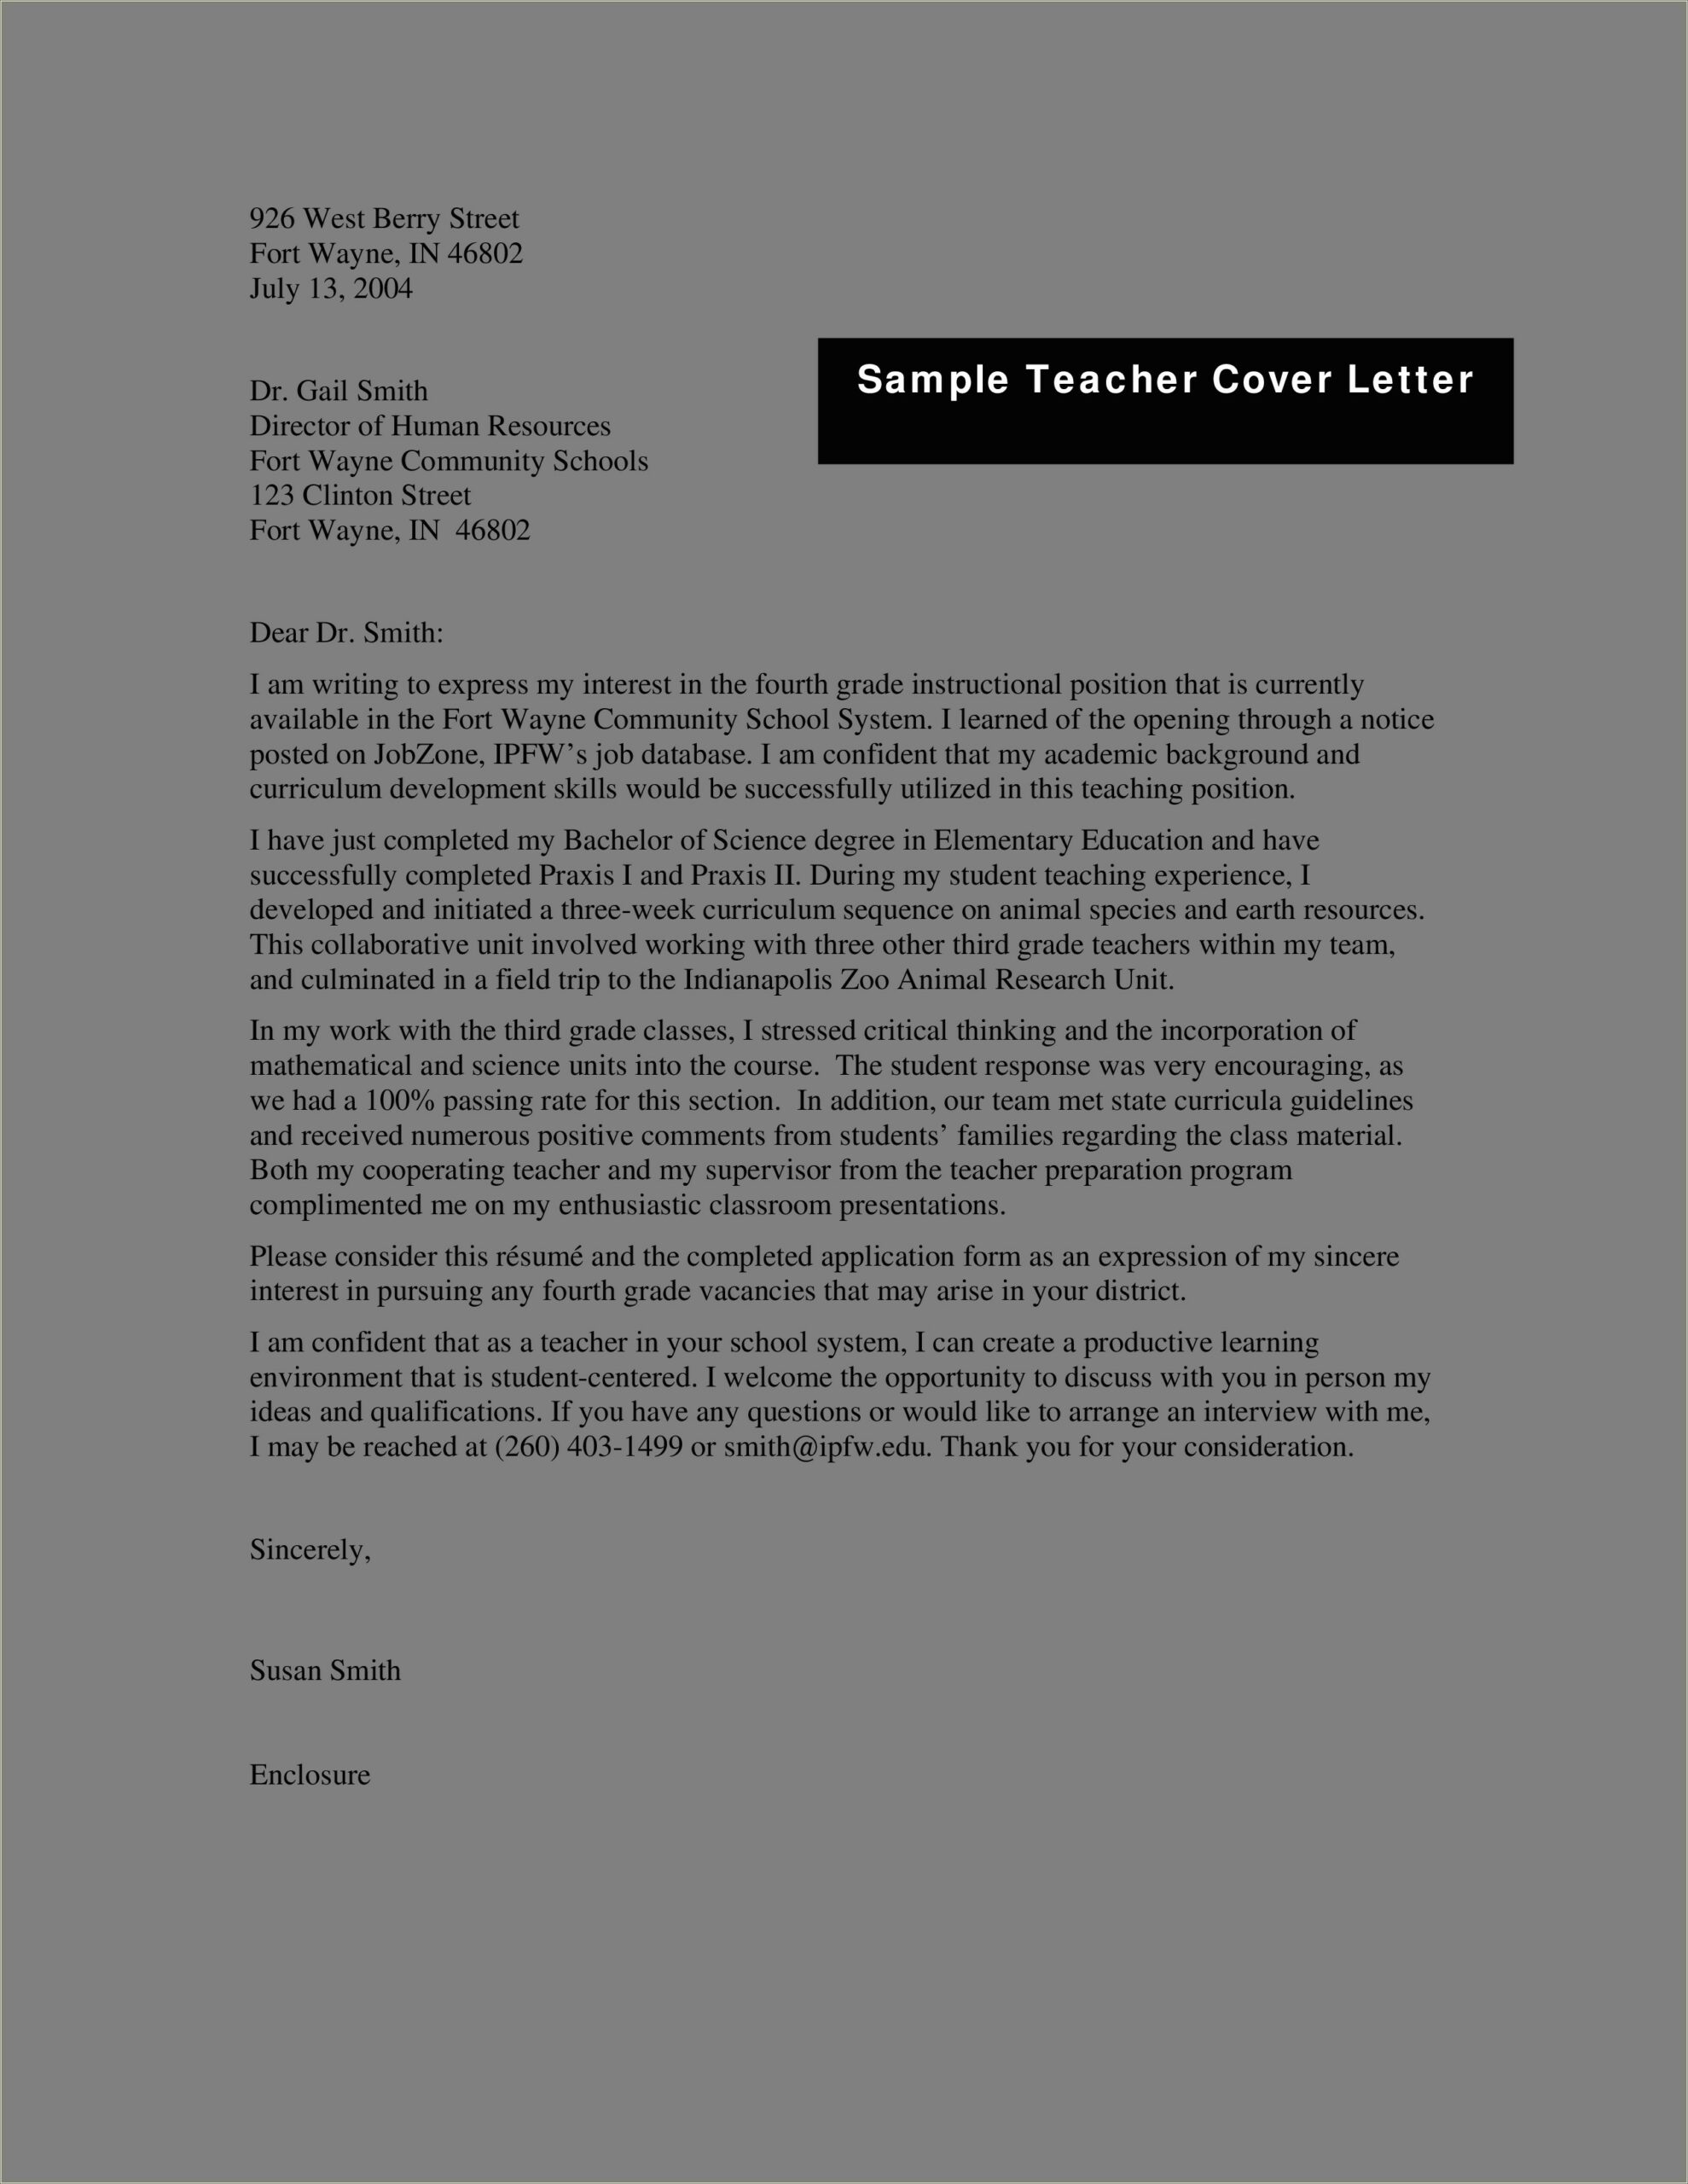 Resume Cover Letter For A Teaching Job